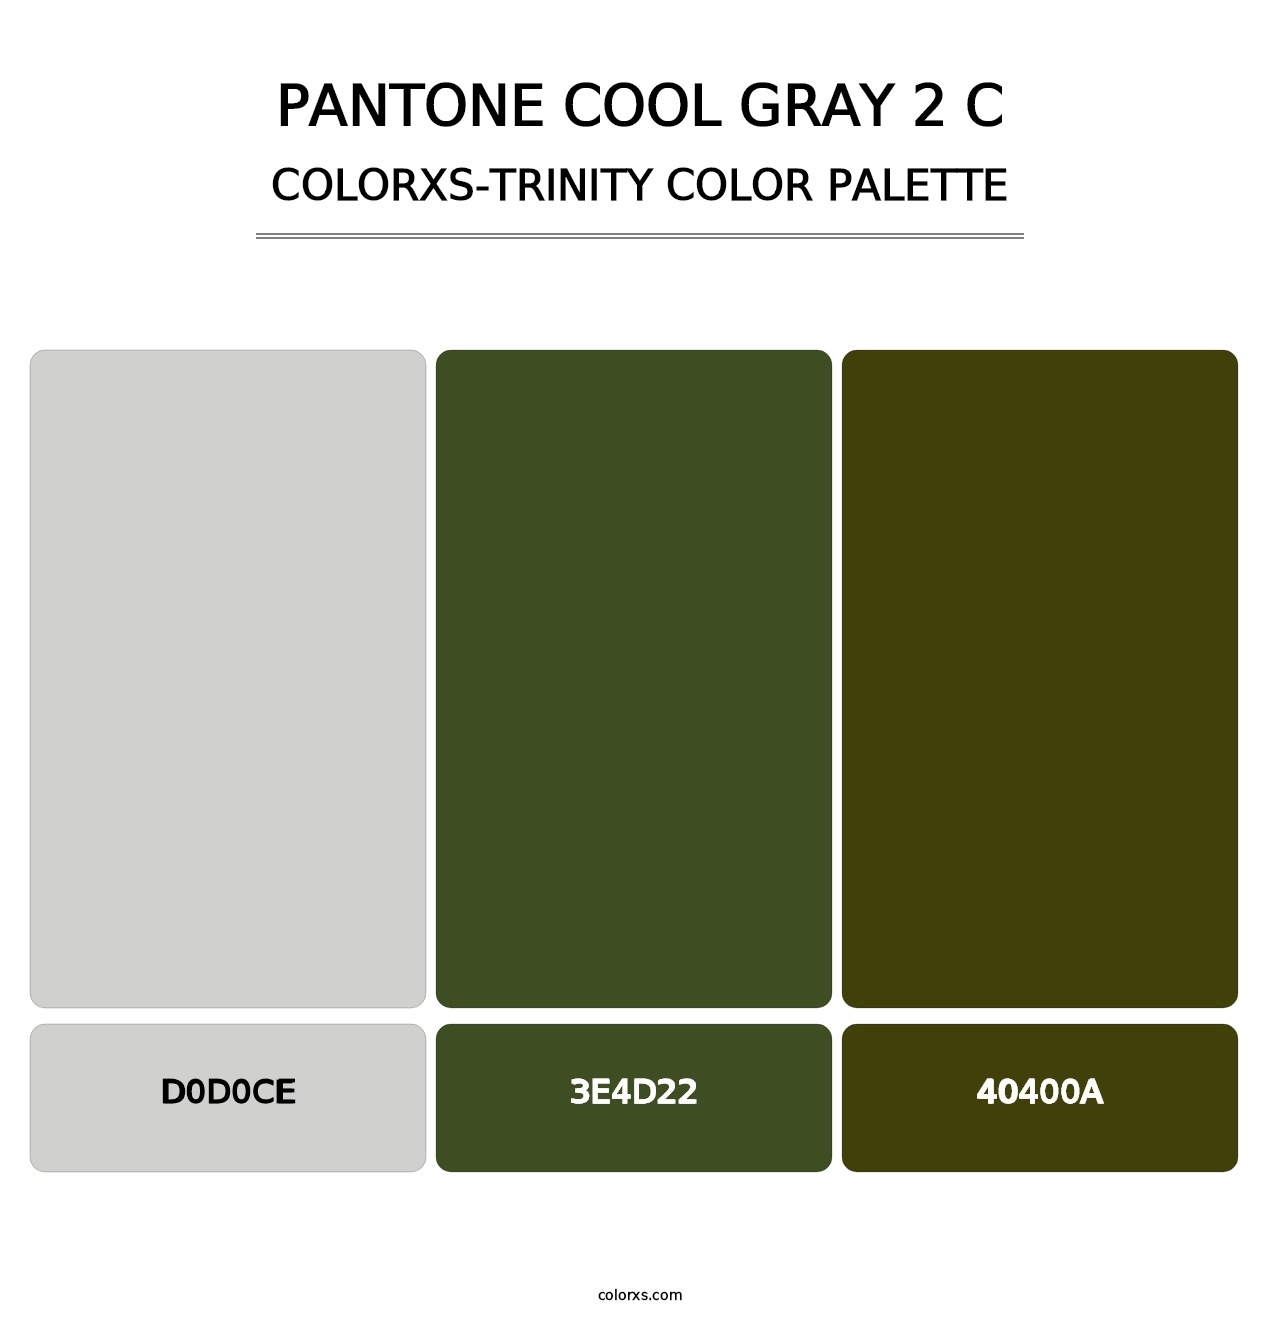 PANTONE Cool Gray 2 C - Colorxs Trinity Palette